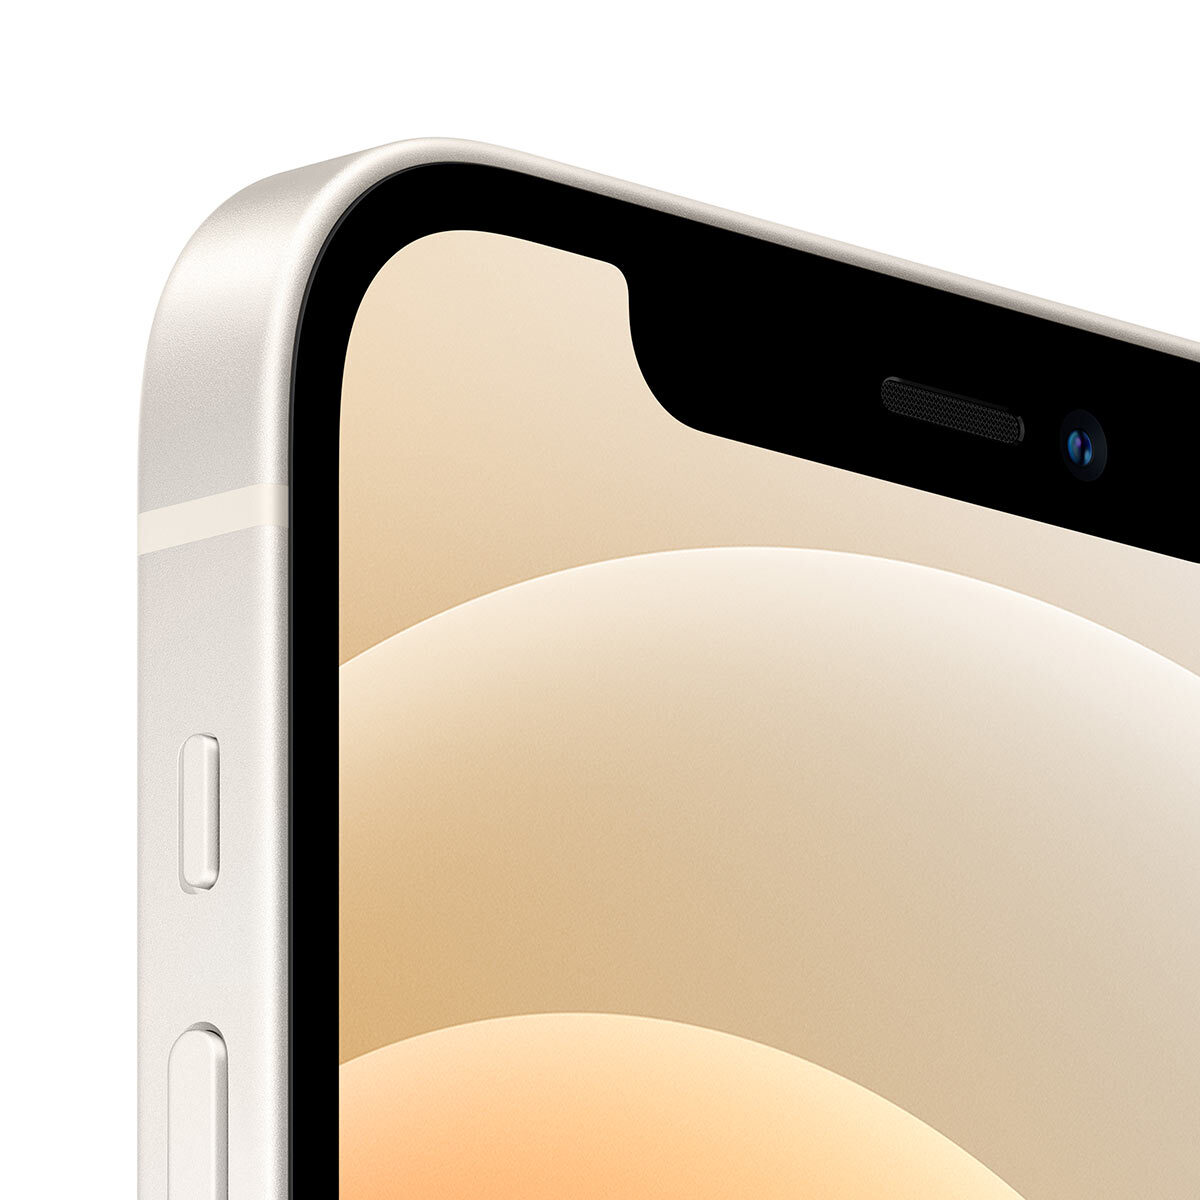 Apple iPhone 12 64GB Sim Free Mobile Phone in White, MGJ6